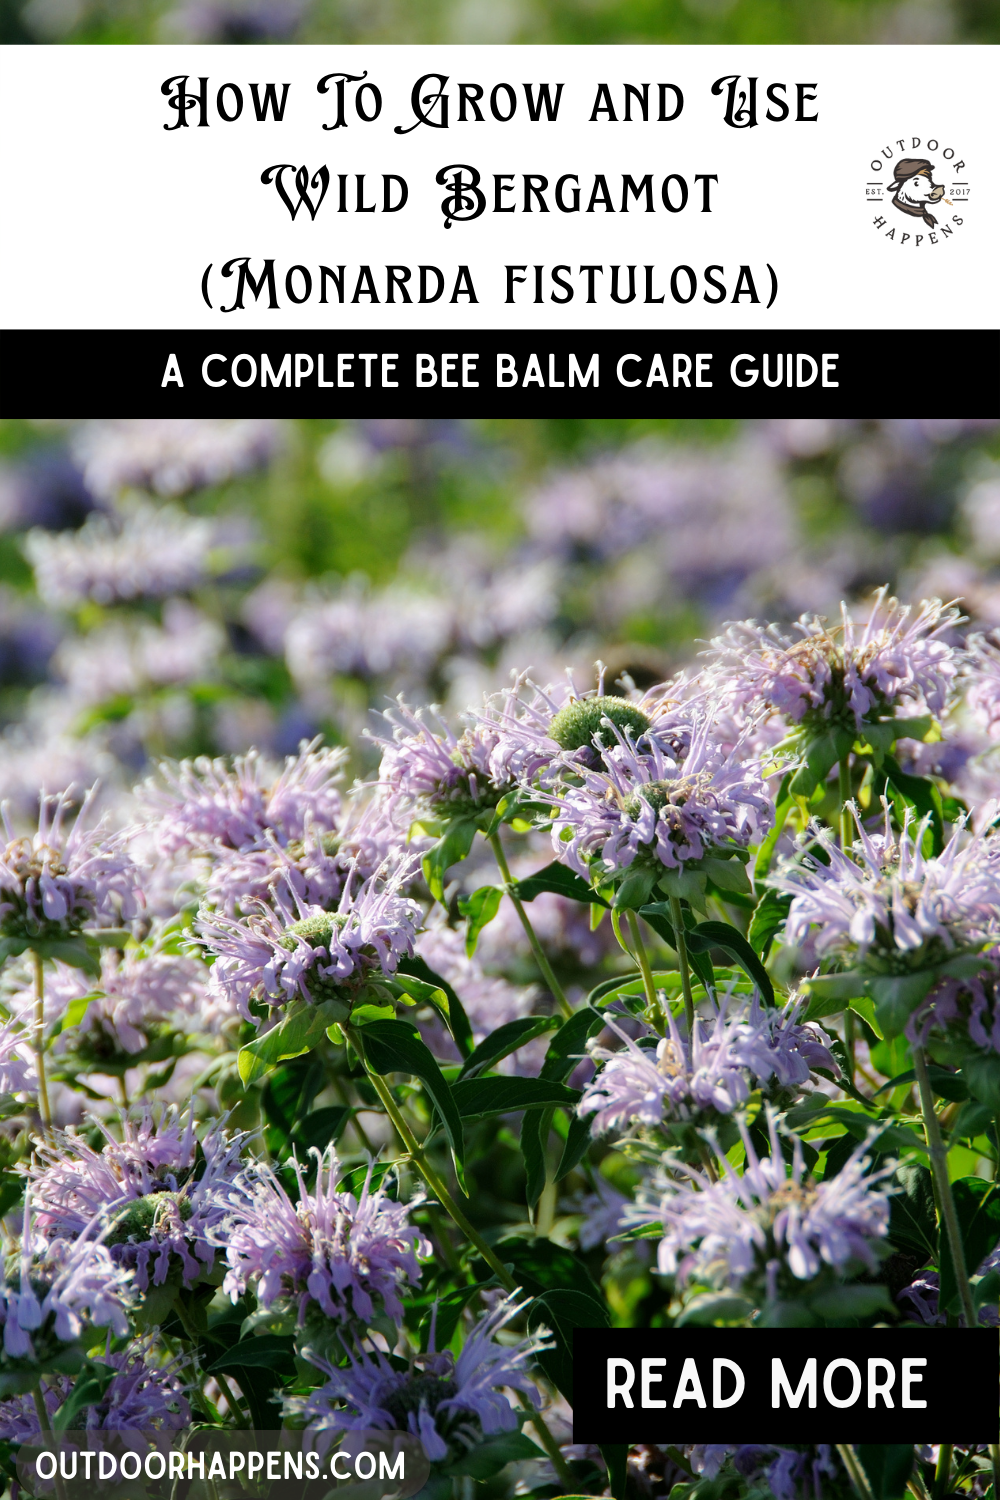 How To Grow and Use Wild Bergamot (Monarda fistulosa) 